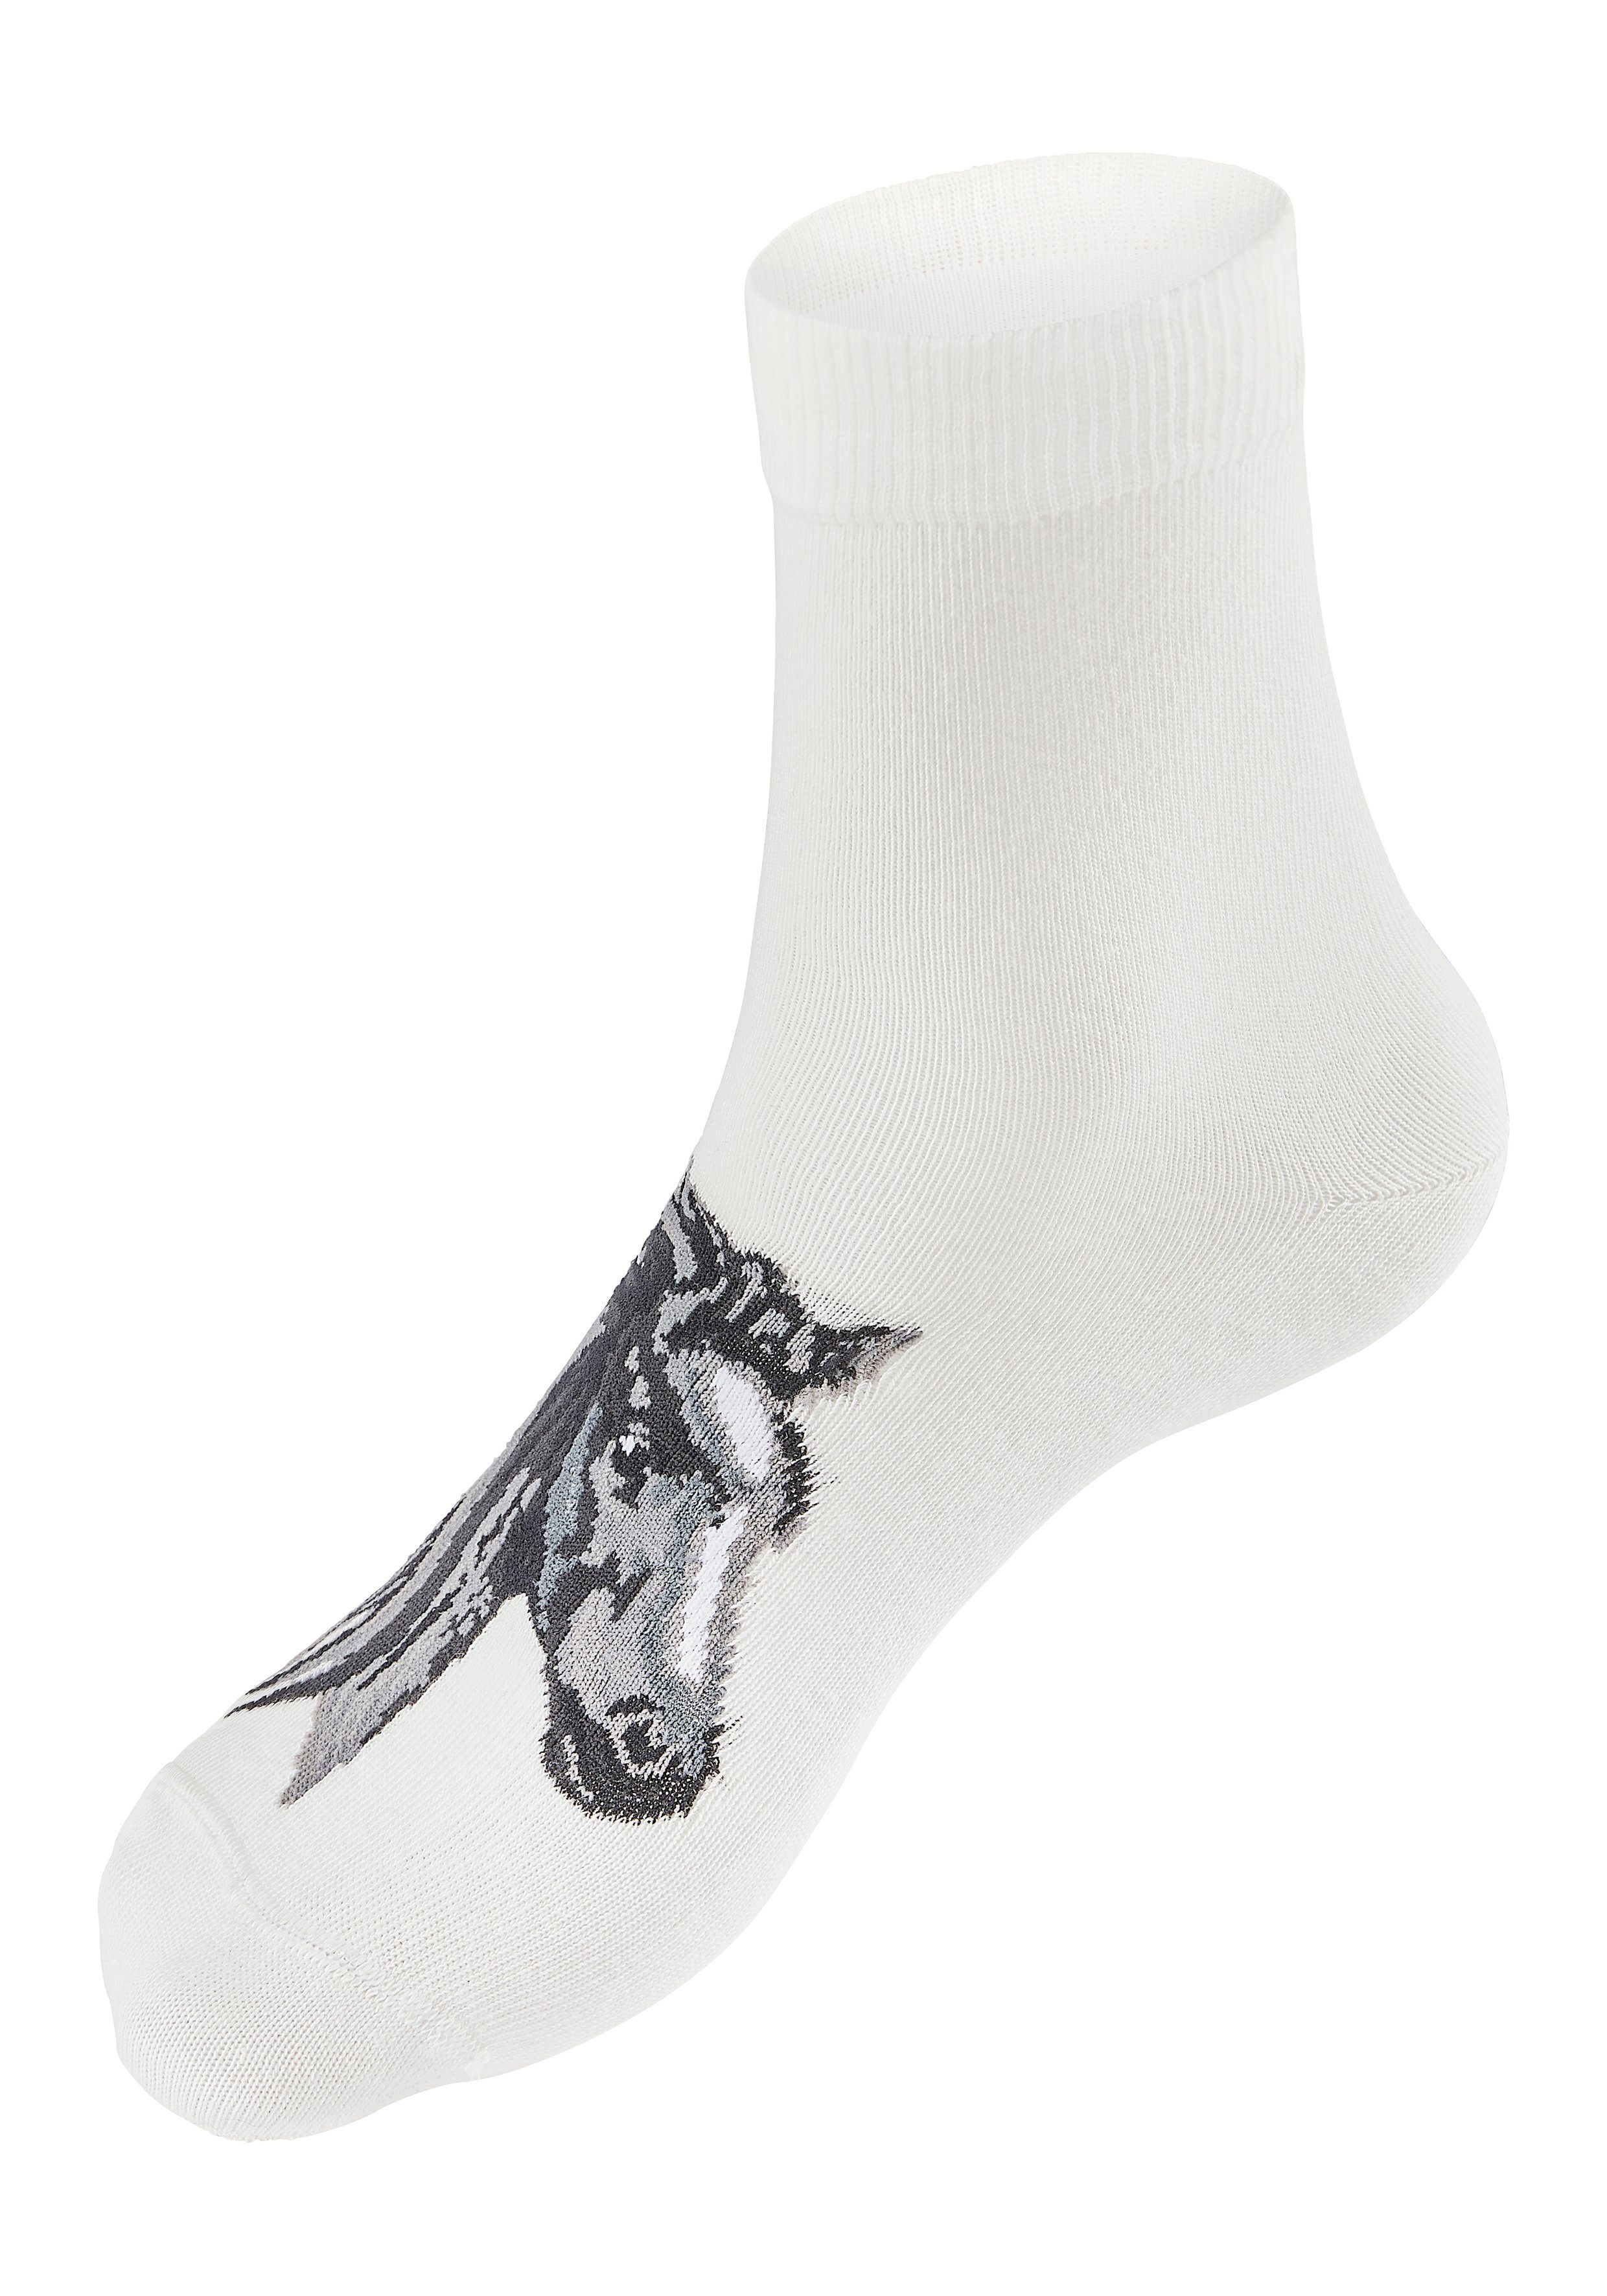 H.I.S Socken (5-Paar) verschiedenen Pferdemotiven mit